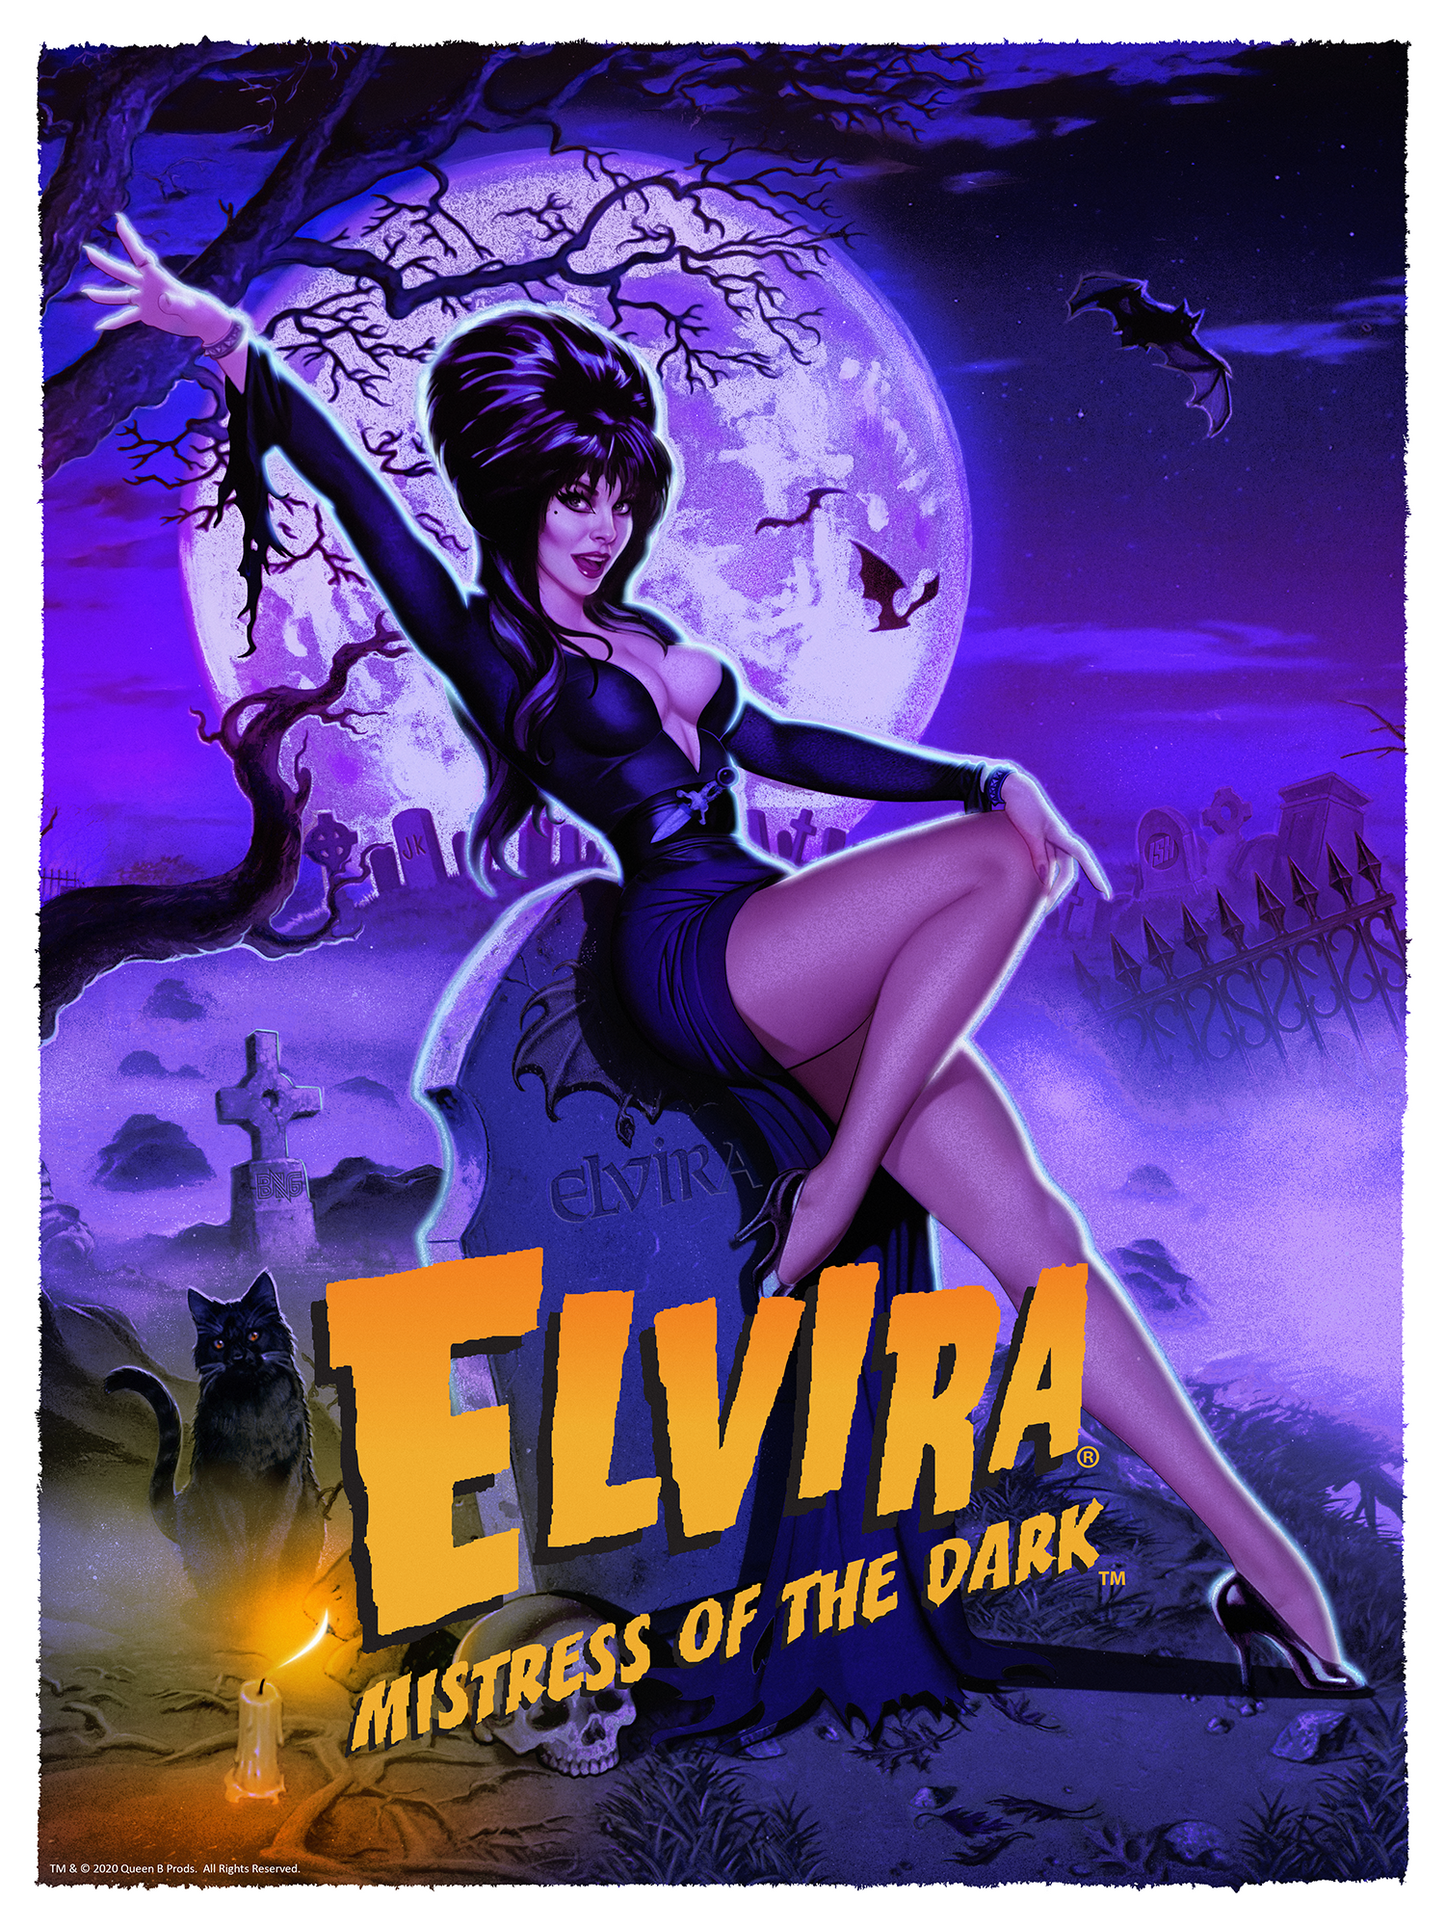 John Keaveney "Elvira: Mistress of the Dark" Graveyard Edition